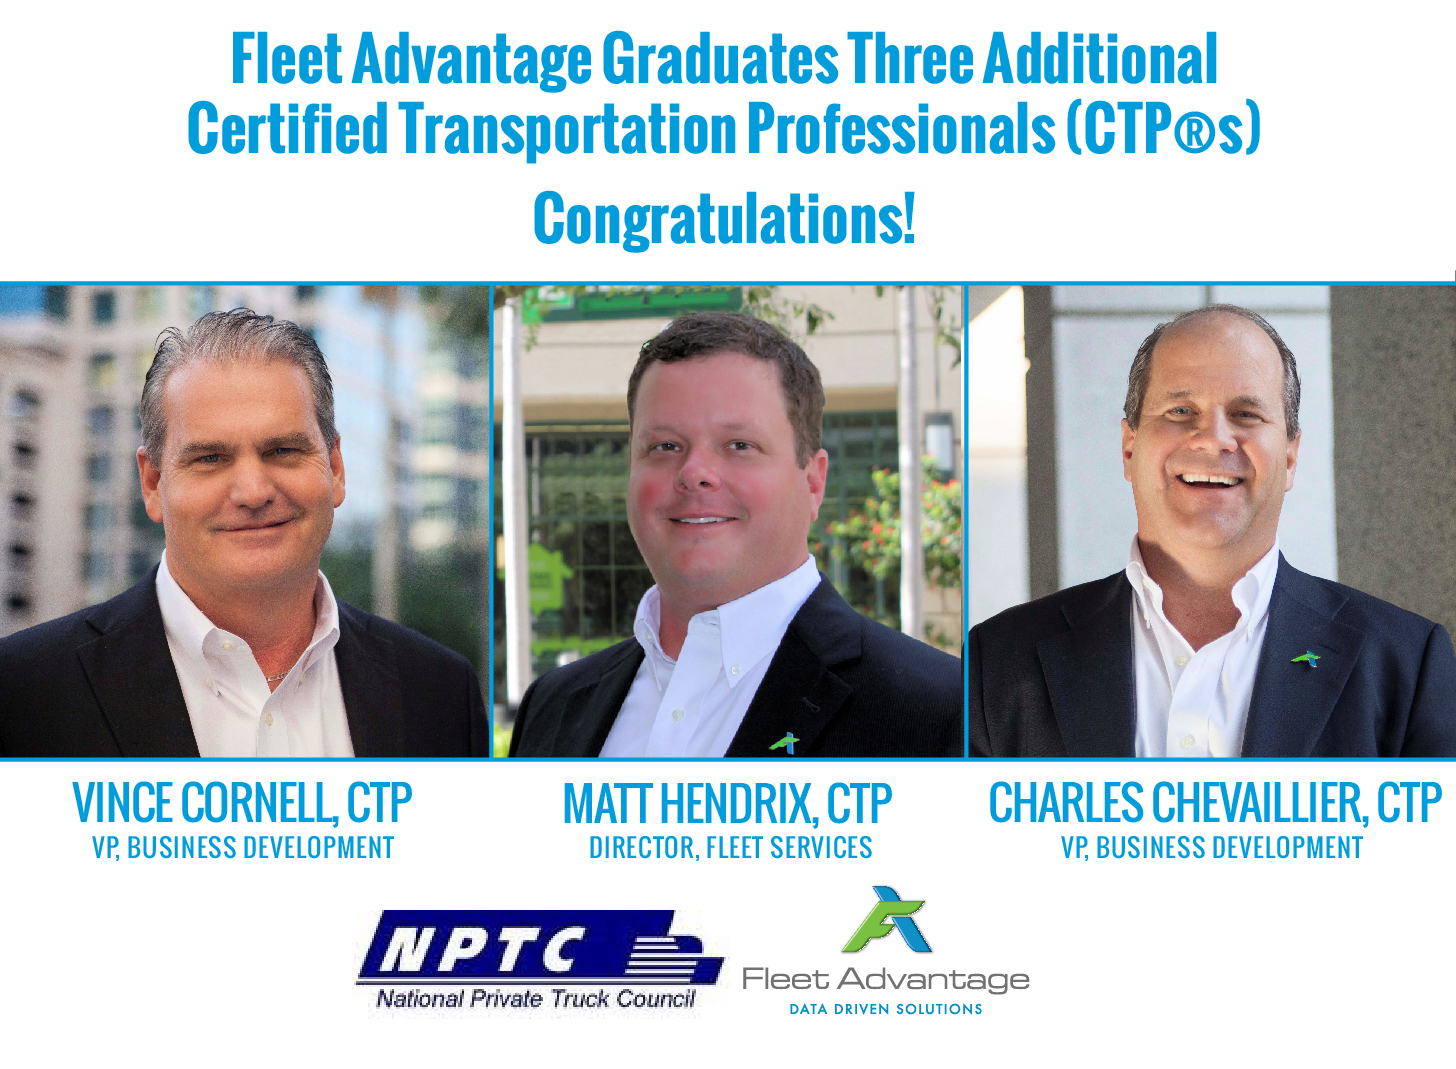 Fleet Advantage Graduates Three Additional Certified Transportation Professionals